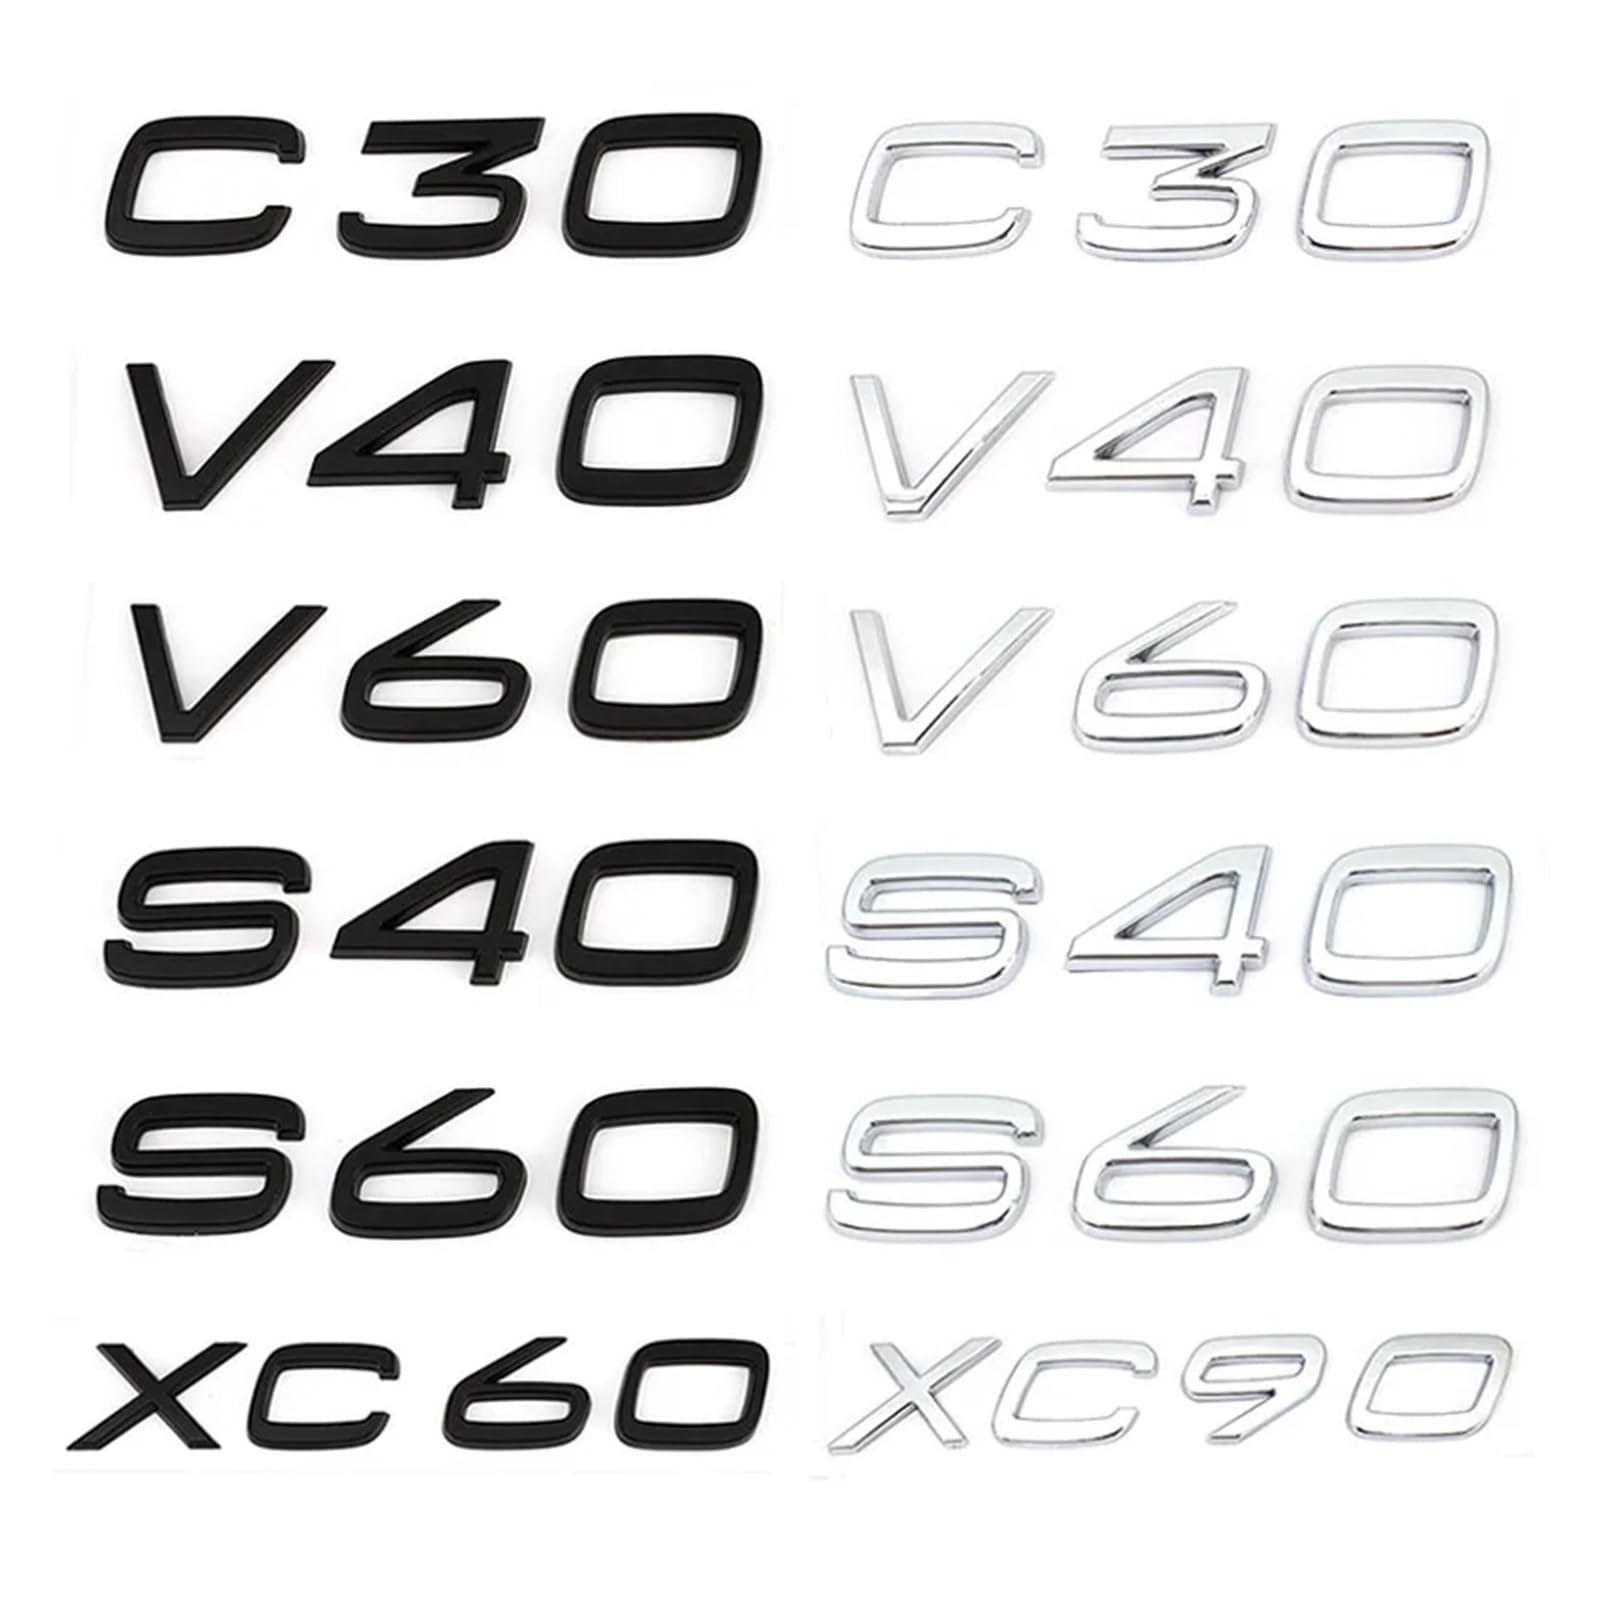 Aqxyju 3D AWD T3 T5 T6 T8 Logo-Emblem-Abzeichen Aufkleber Autoaufkleber Kompatibel mit C30 V40 V60 S40 S60 XC60 XC90 XC40 S80 S90 S80L S60L Auto-Styling Personalisierte Auto Aufkleber(Black,S80) von Aqxyju